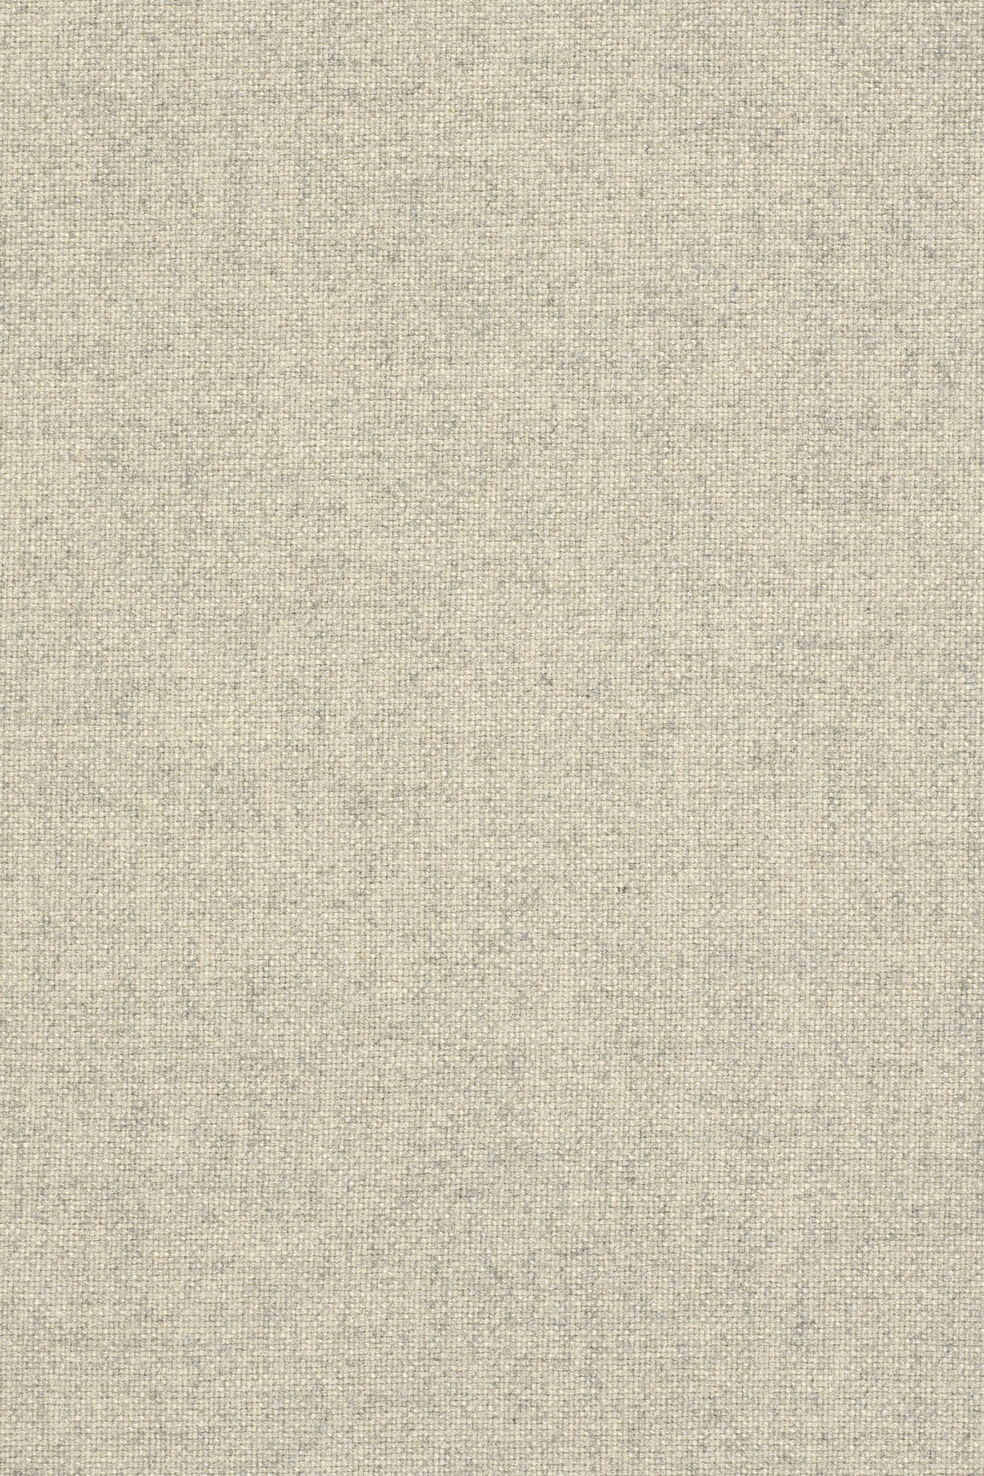 Fabric sample Tonica 2 233 white